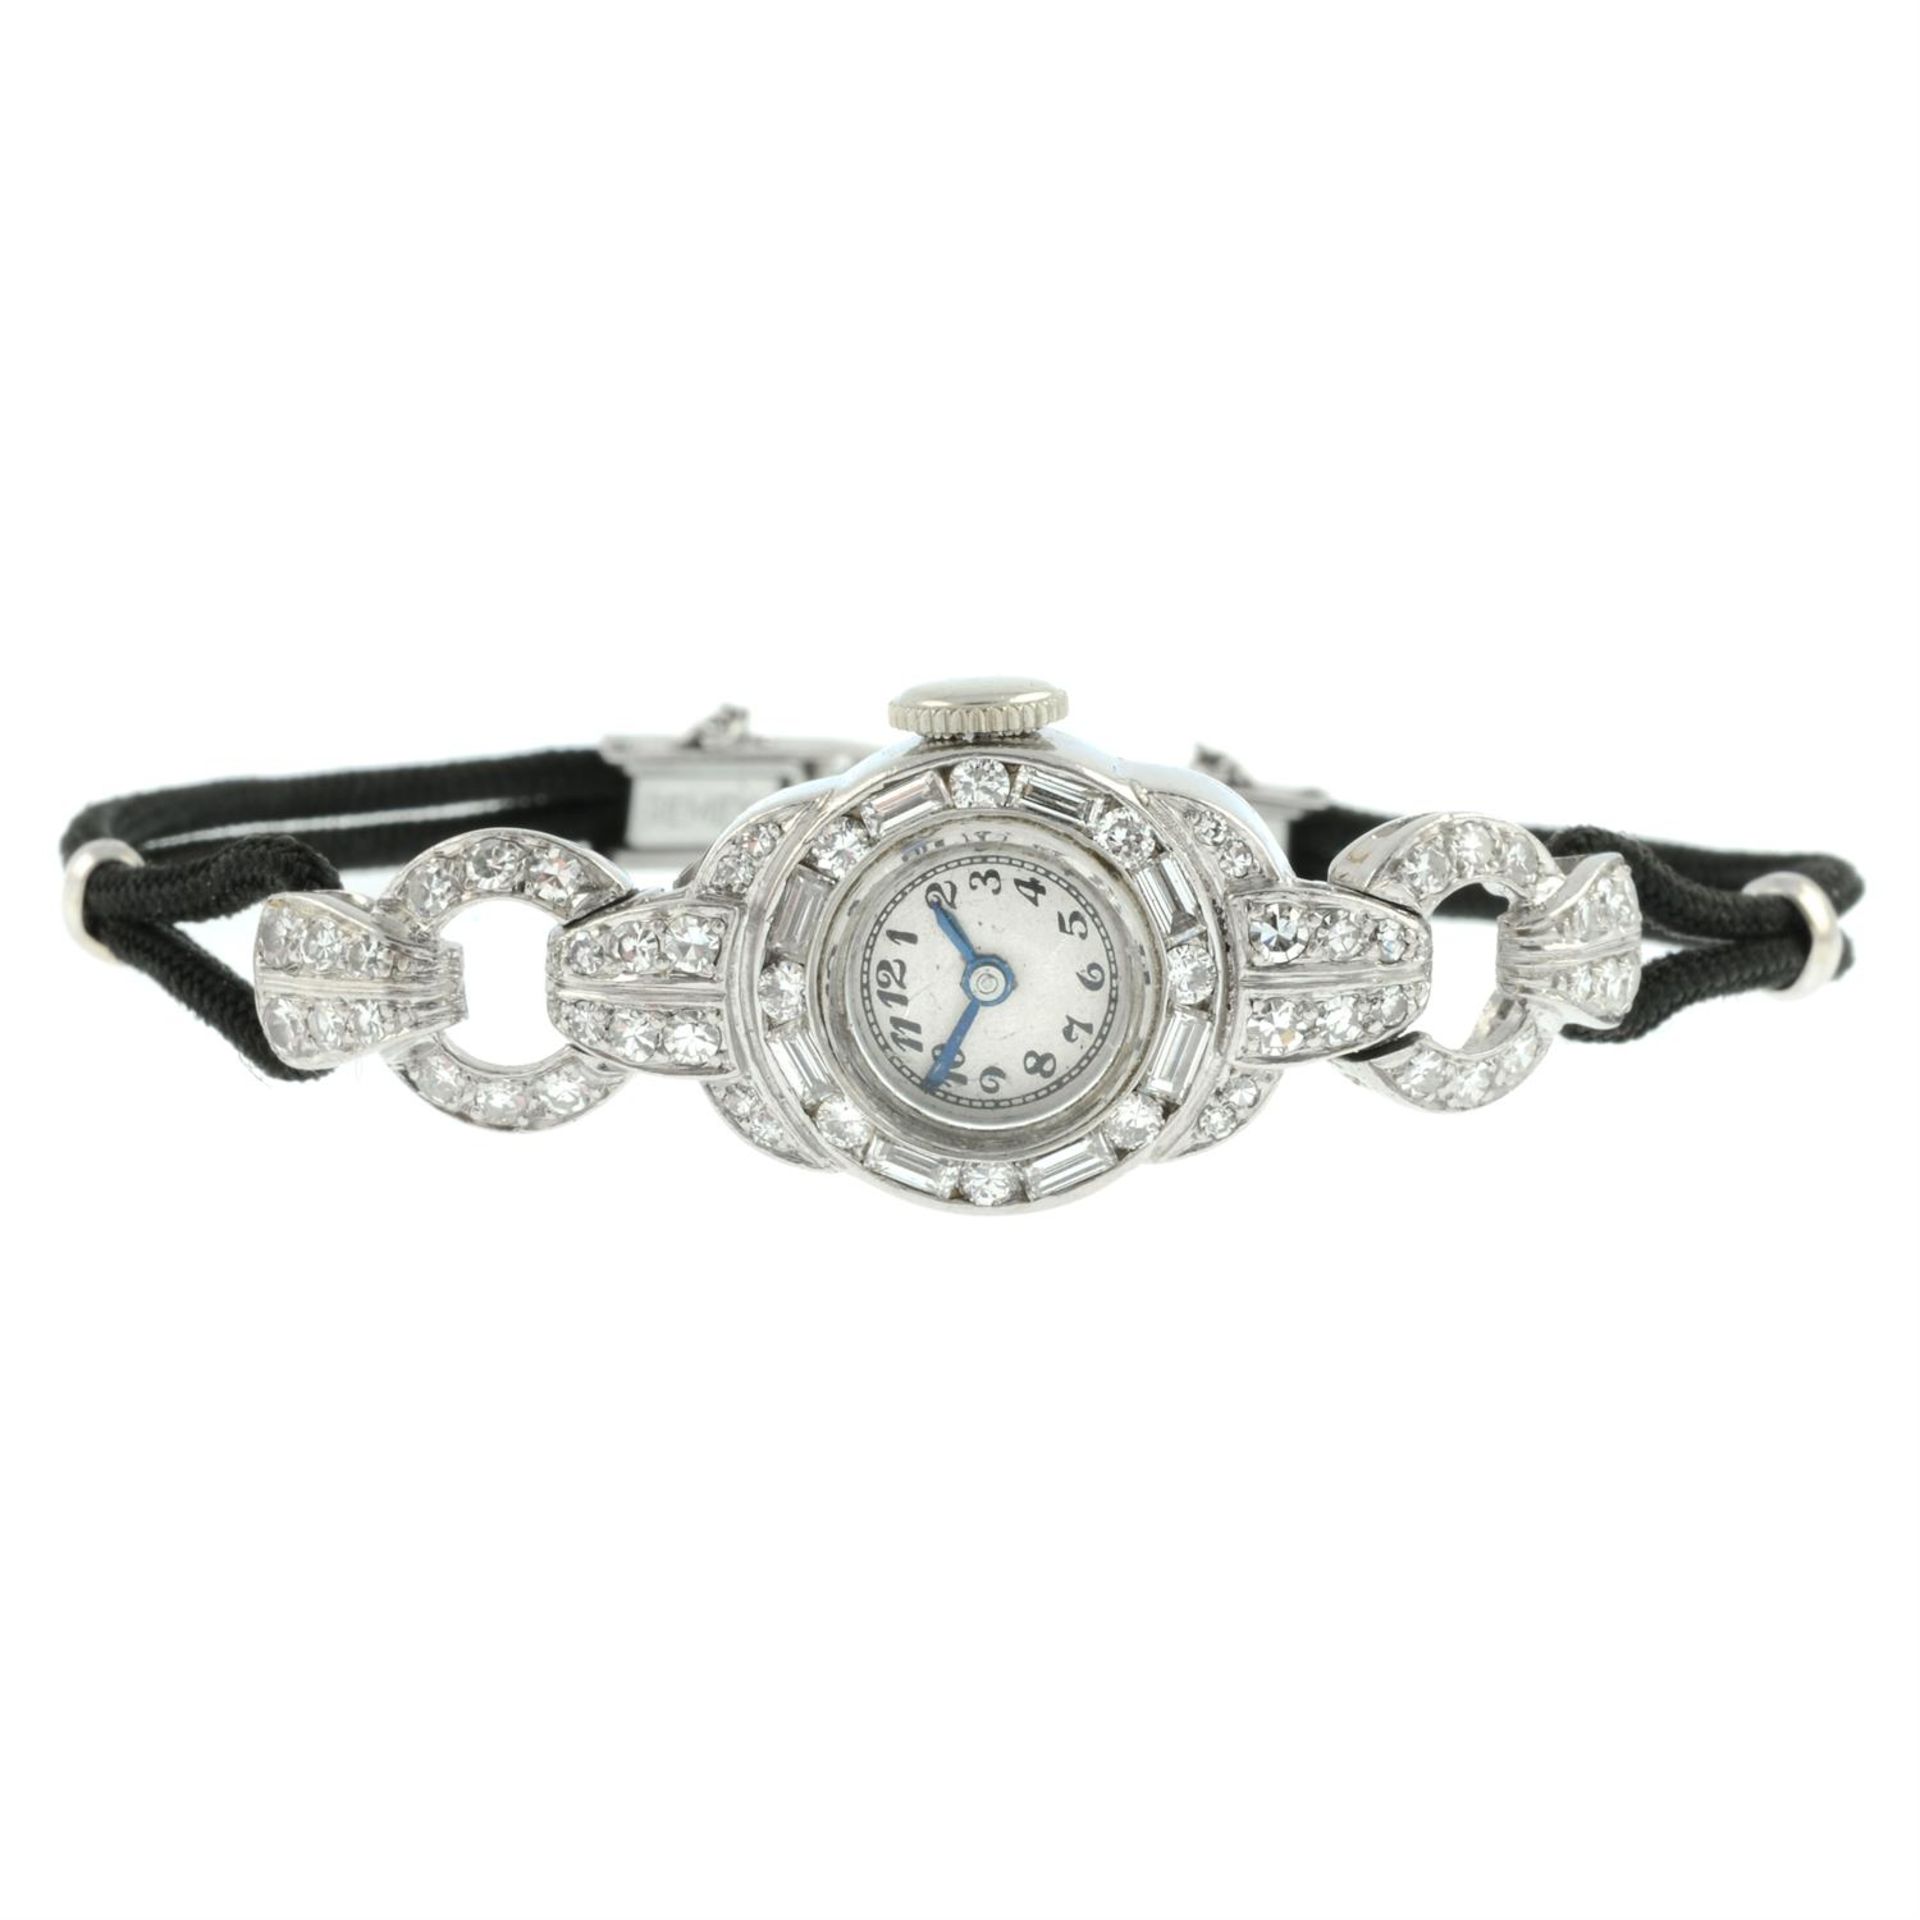 A lady's mid 20th century platinum vari-cut diamond wrist watch, by Movado. - Image 2 of 4